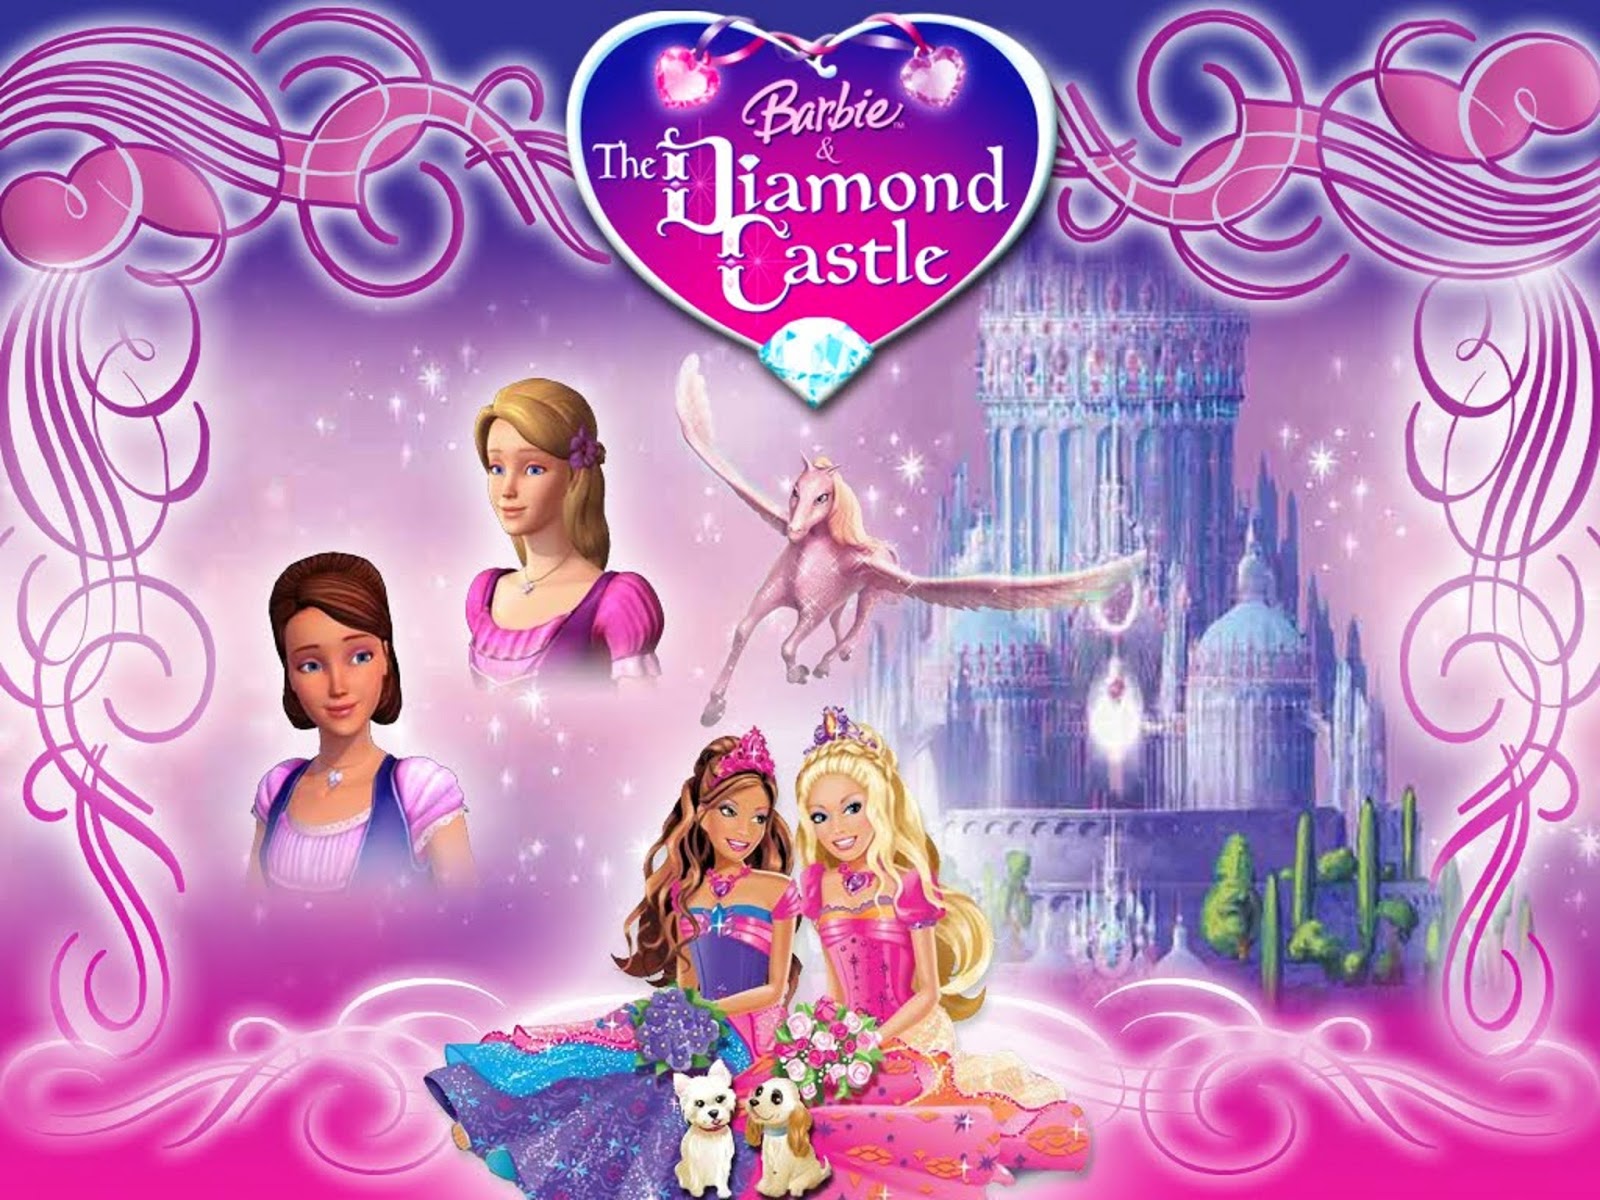 Barbie & the Diamond Castle (2008) Movie Online